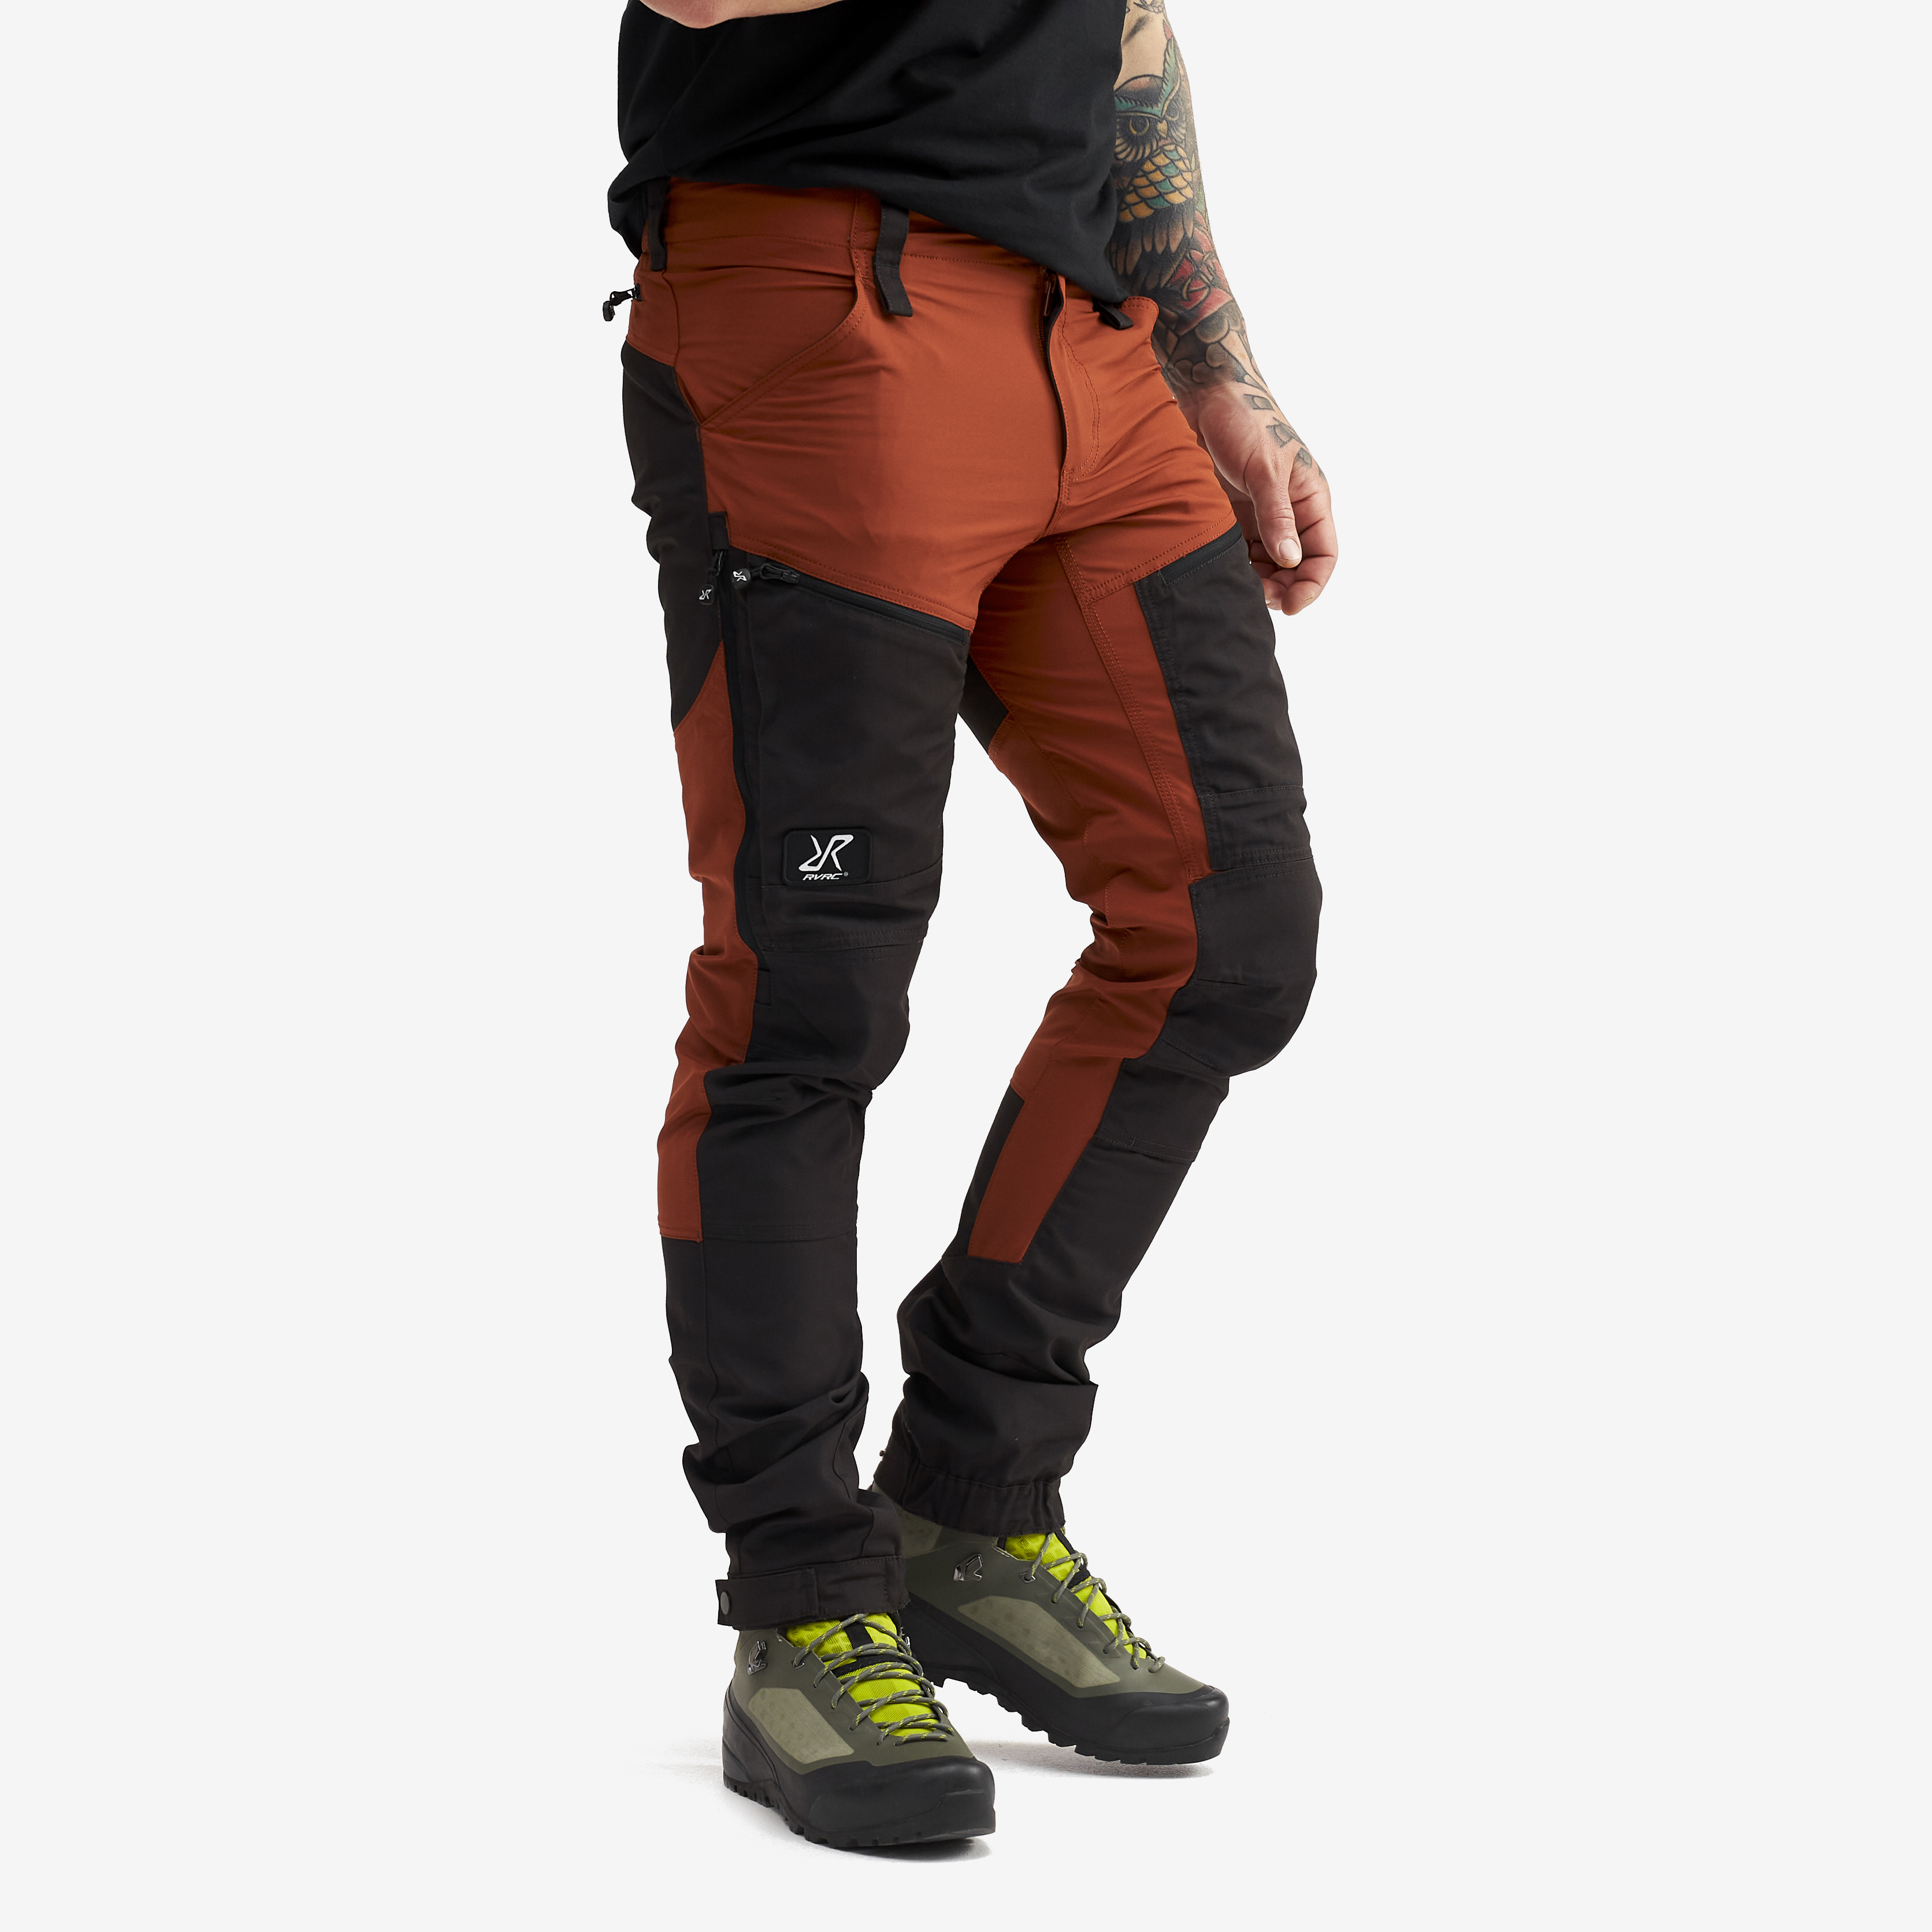 RVRC GP Pro hiking trousers for men in orange